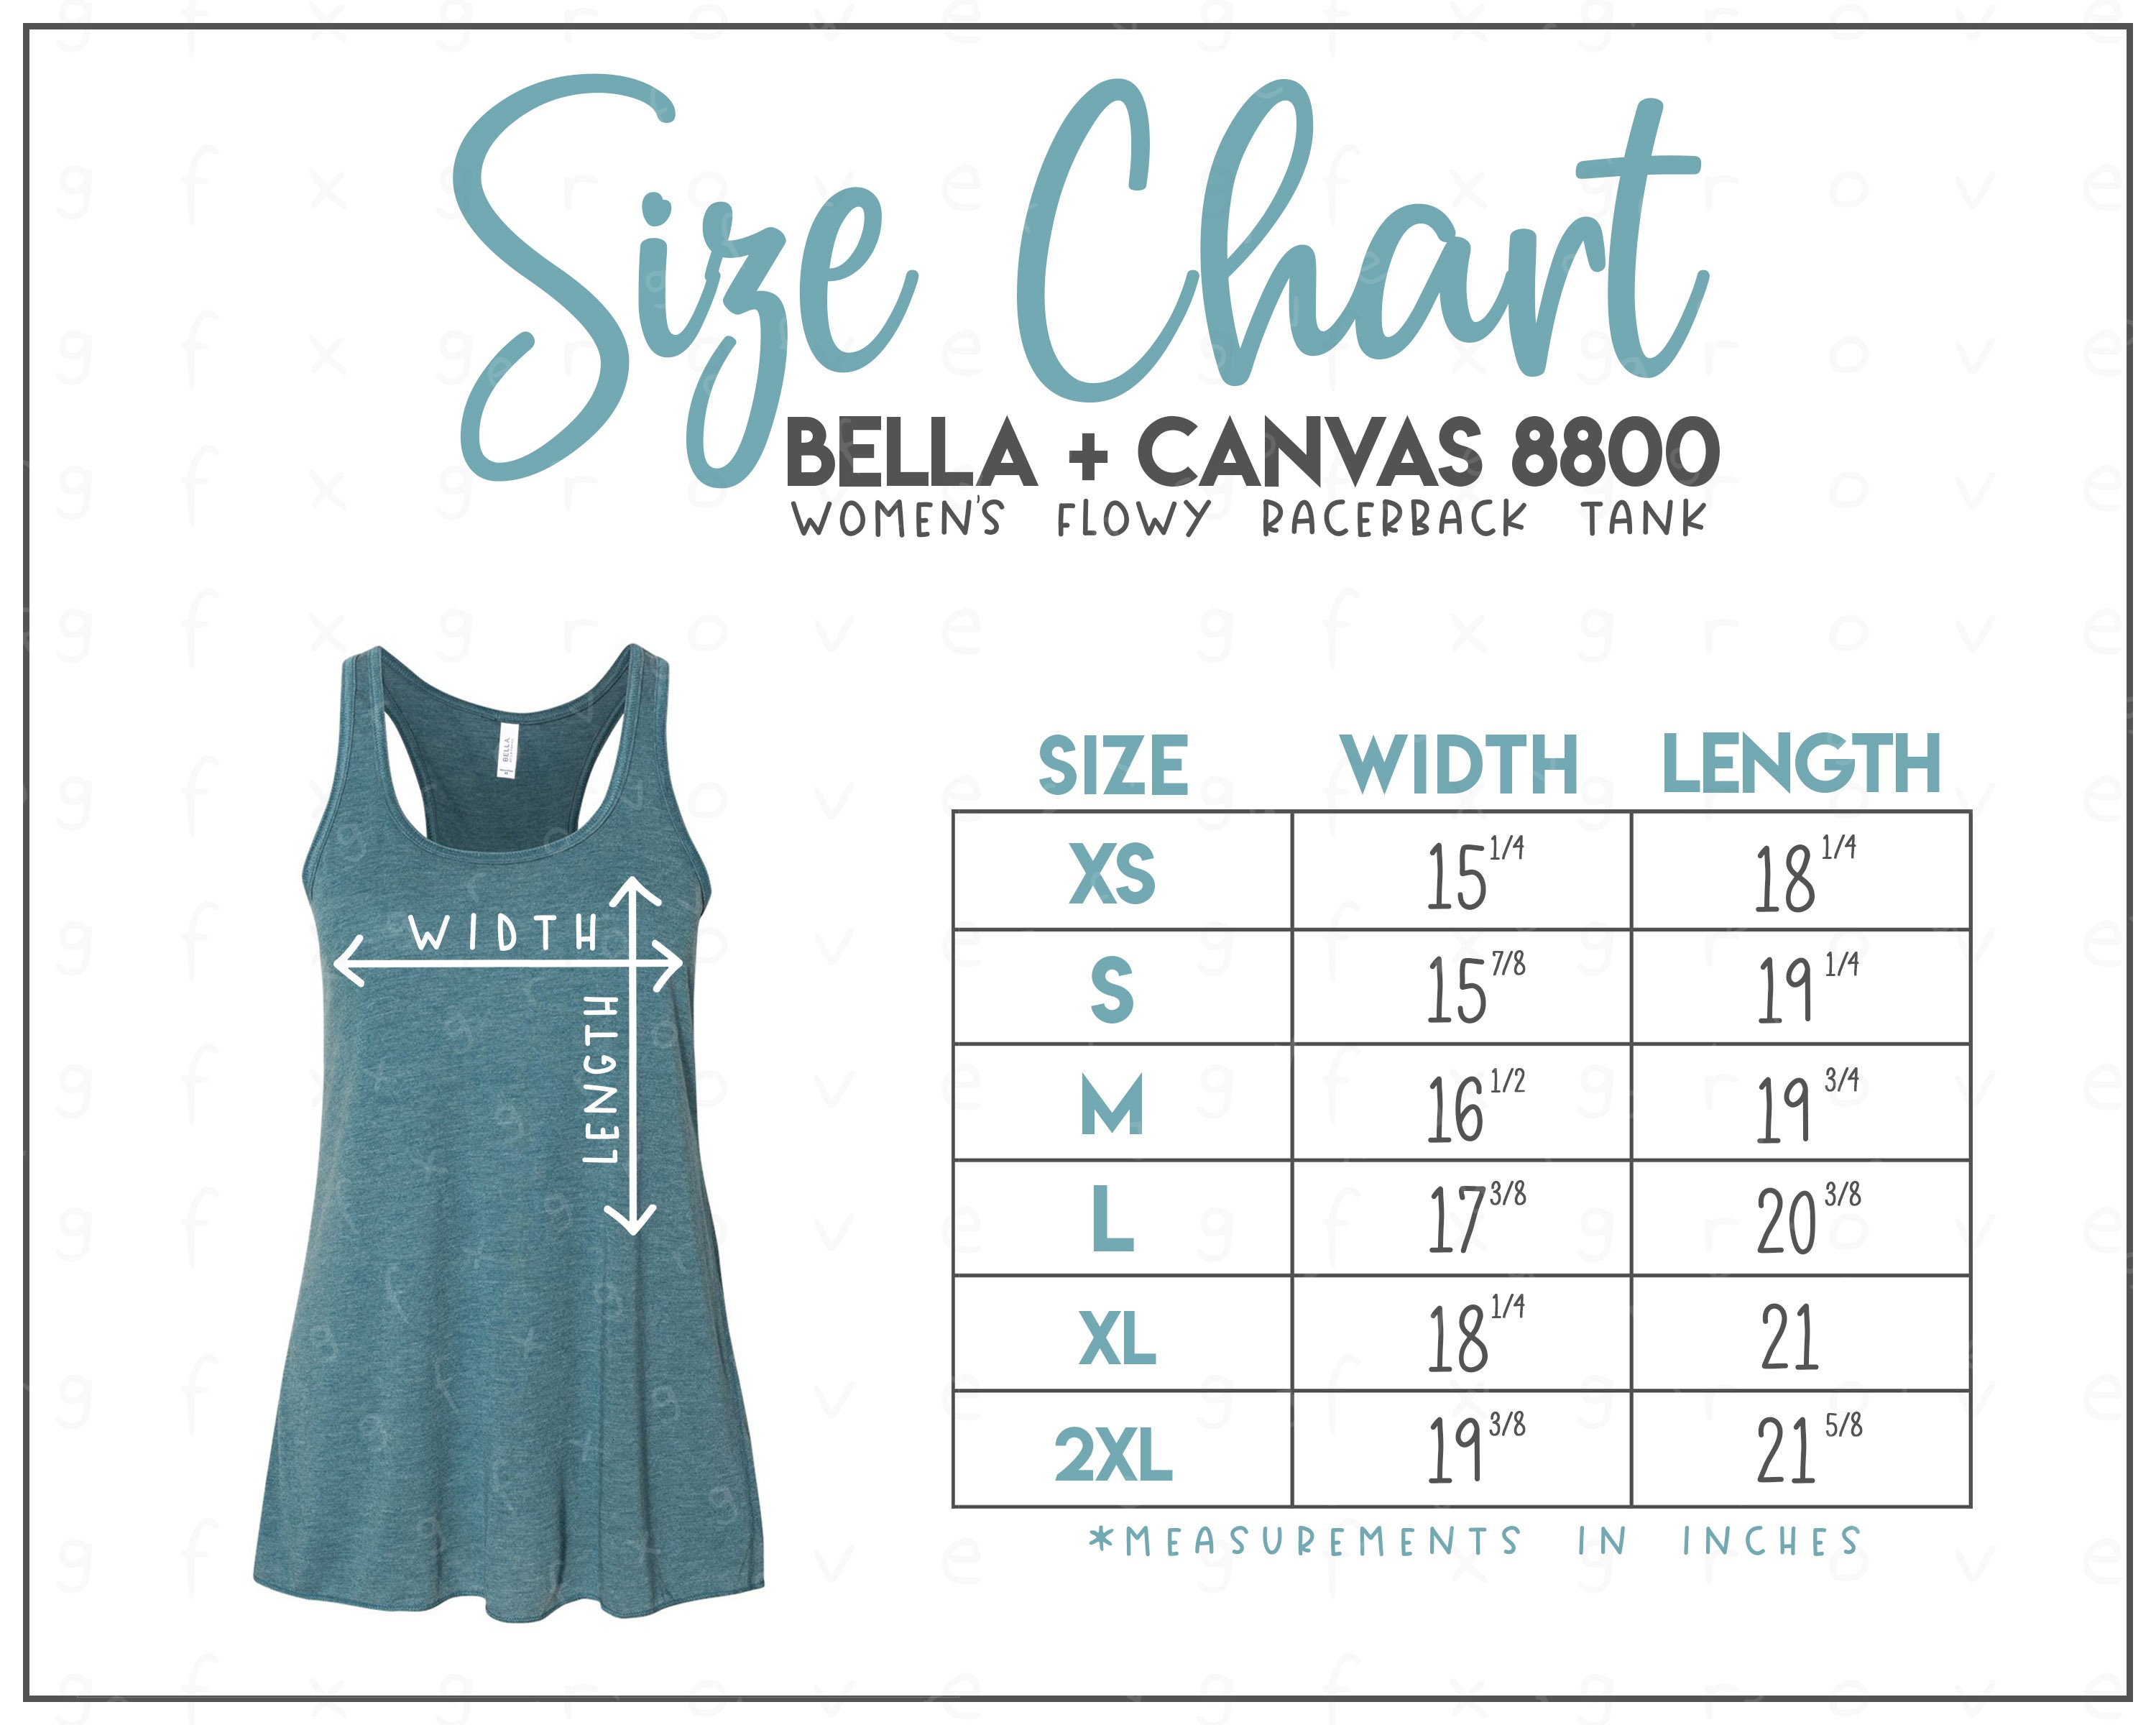 Bella Canvas 8800 Size Chart Bella Canvas Flowy Racerback Tank Size Chart Bella  Canvas B8800 Bella and Canvas Tank Top Size Chart 